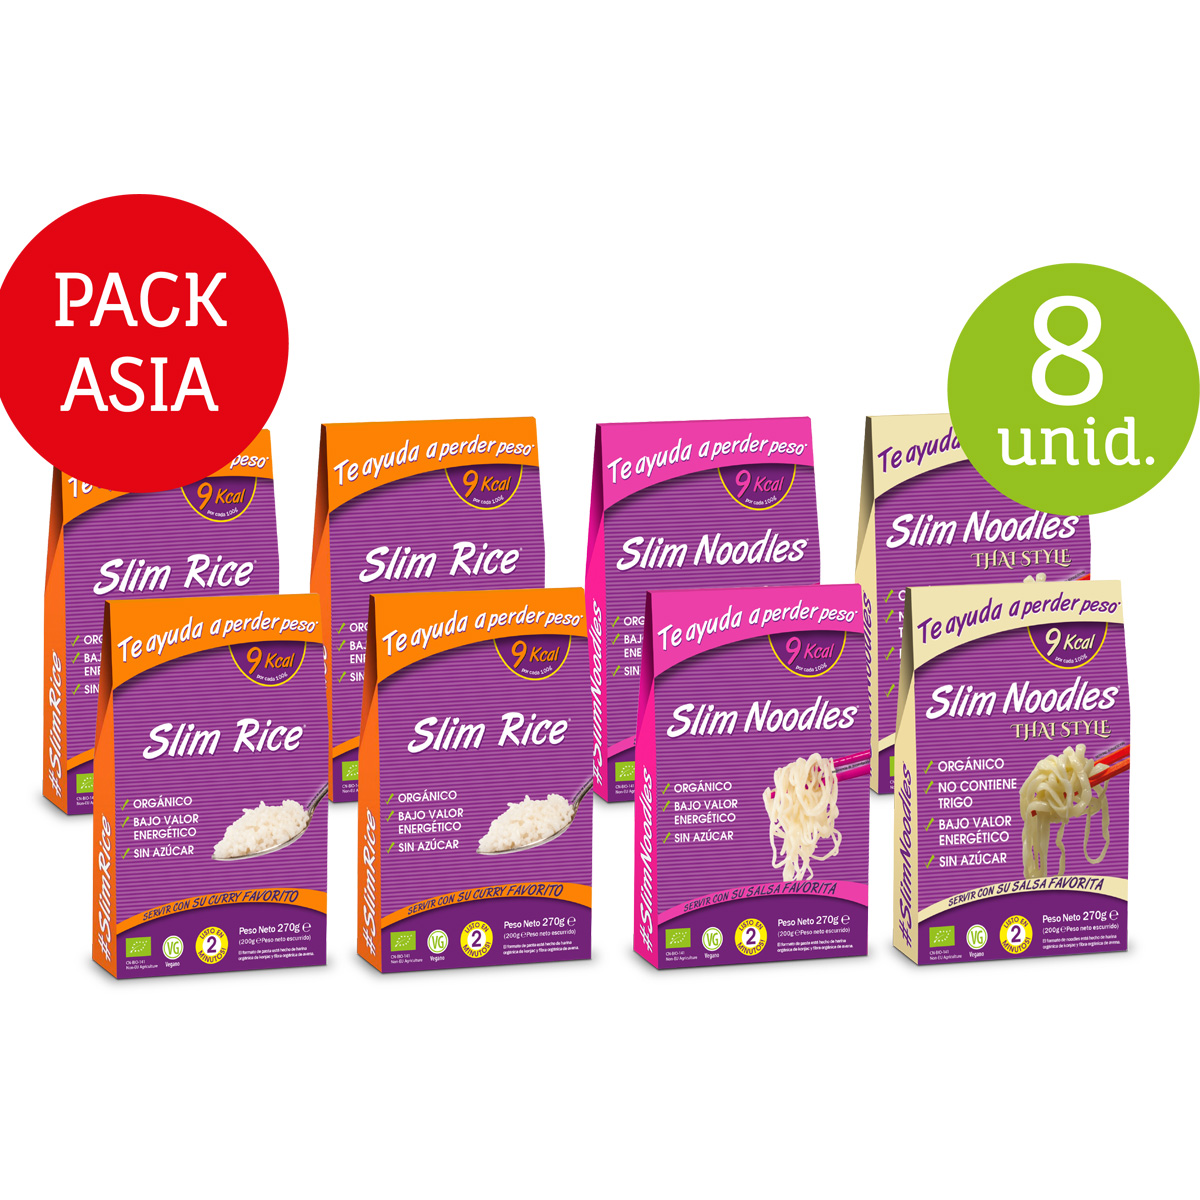 Asia pack slim rice